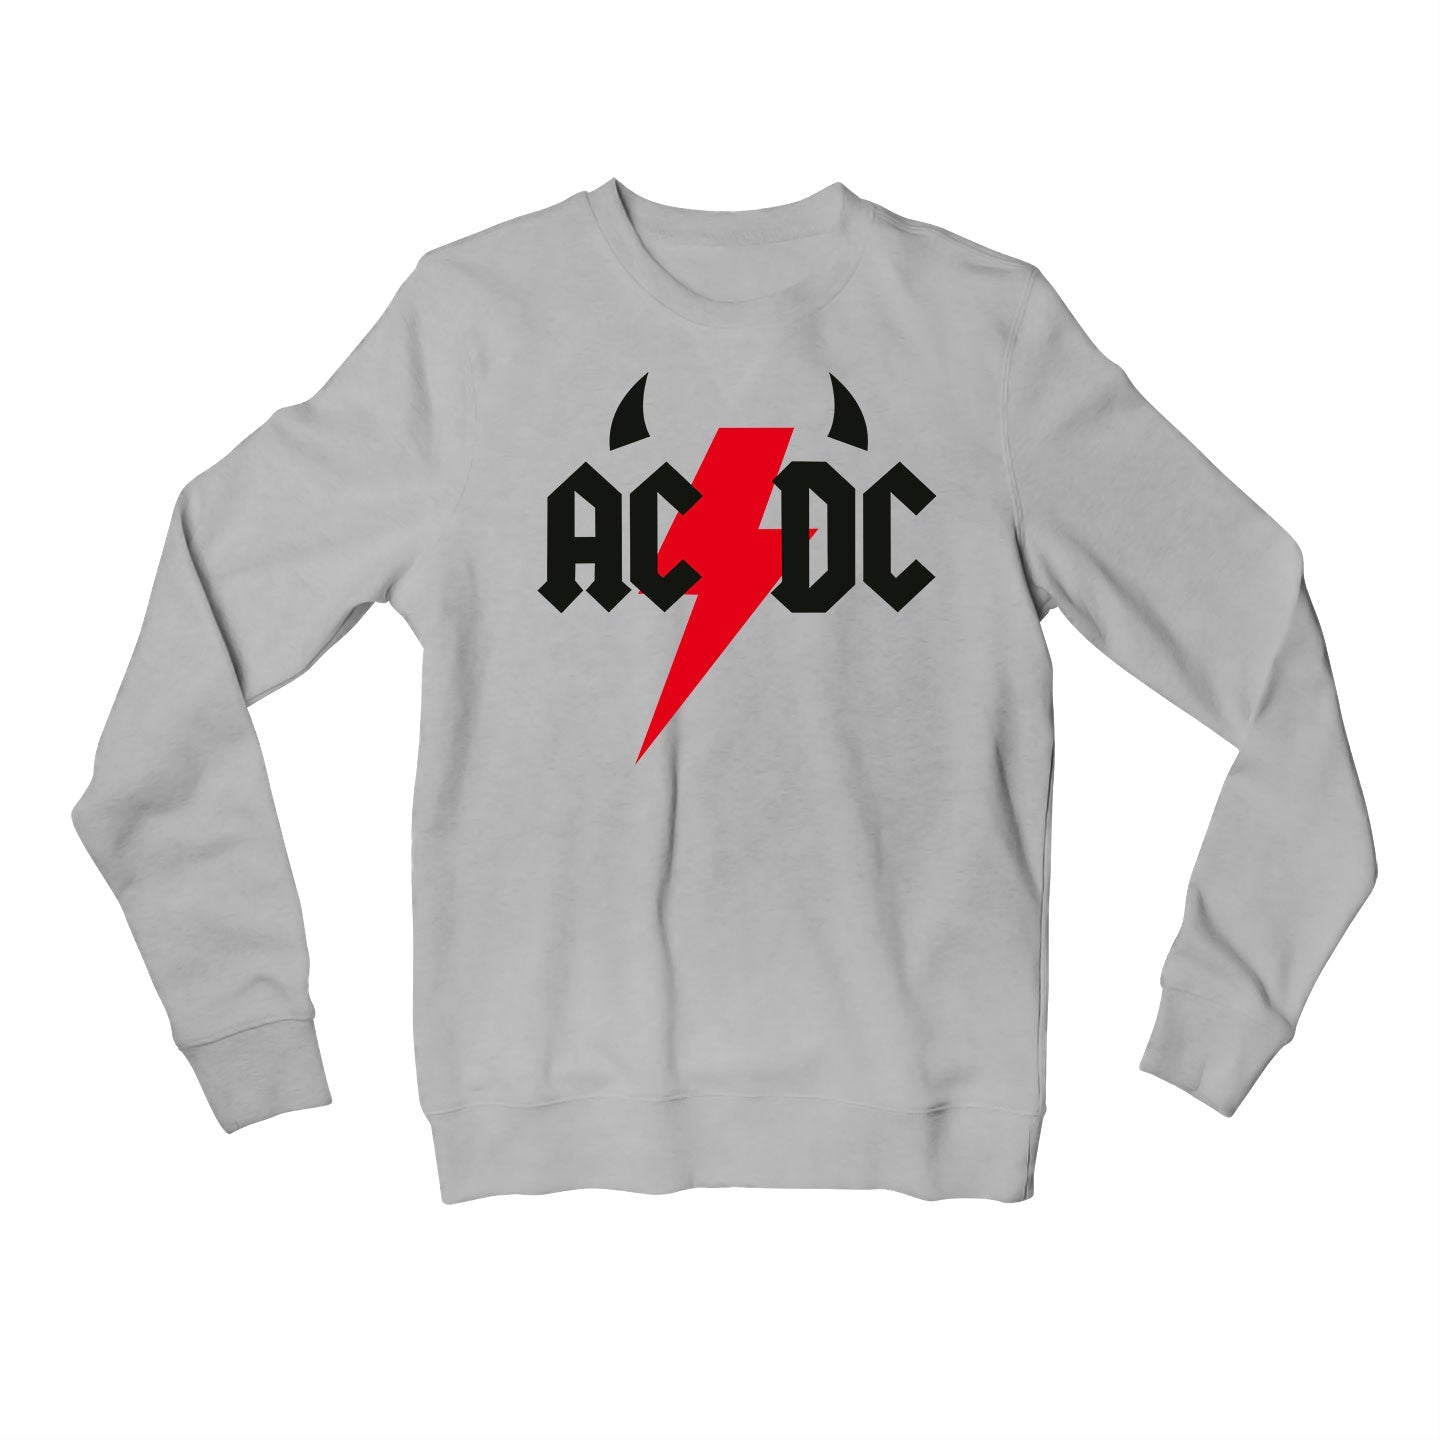 ac/dc rock sweatshirt upper winterwear music band buy online india the banyan tee tbt men women girls boys unisex gray